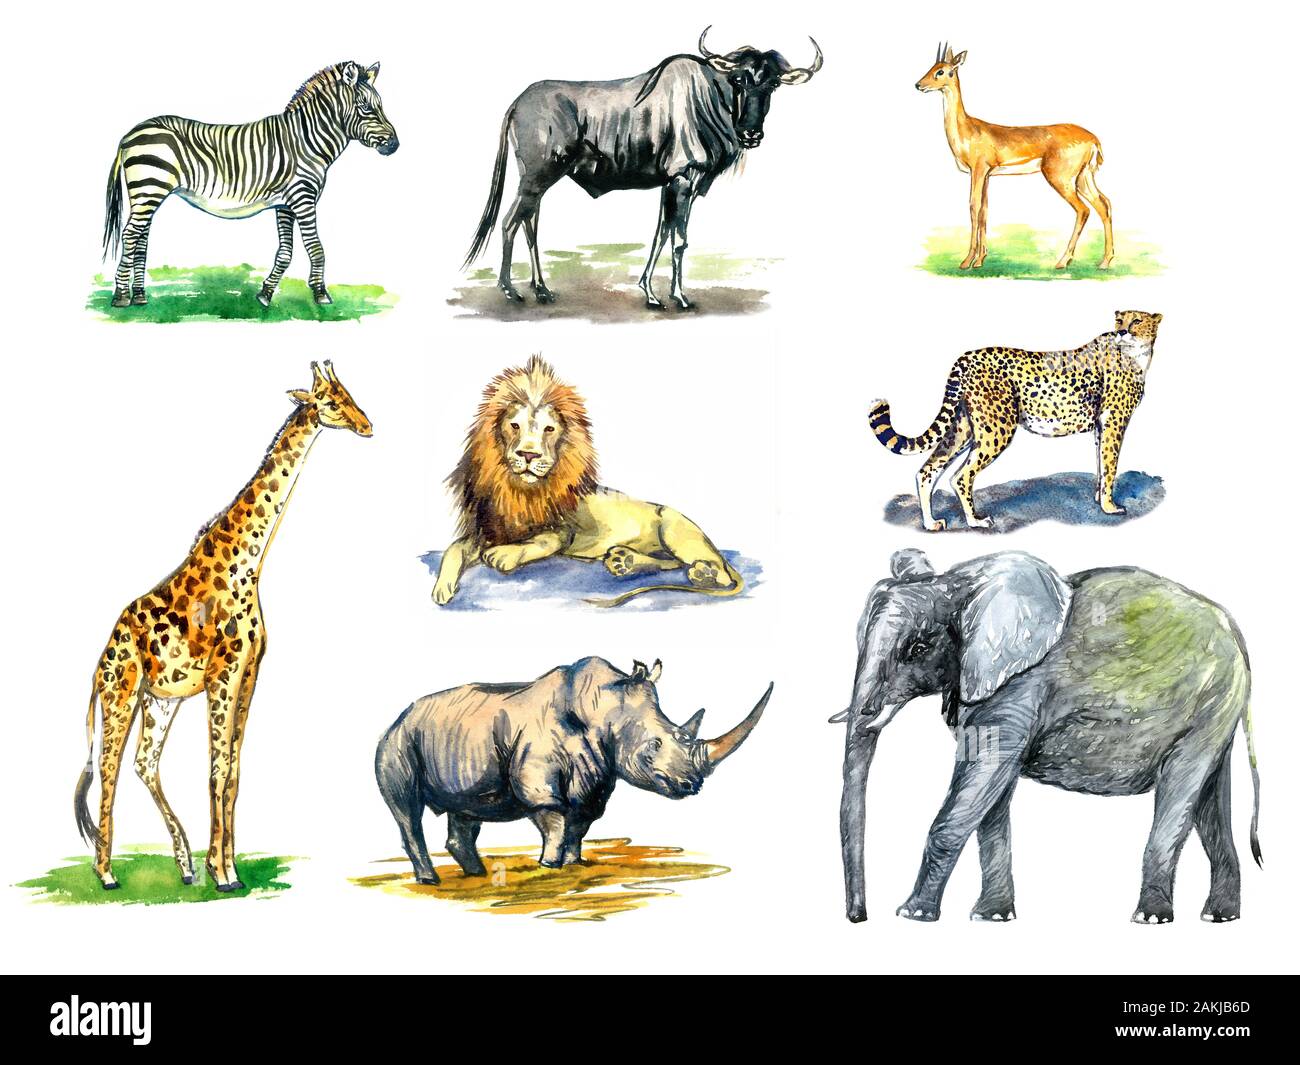 Wild African animals collection, zebra, Wildebeest, Oribi antelope, girafe, lion, rhinoceros, cheetah, elephant, hand painted watercolor illustration Stock Photo